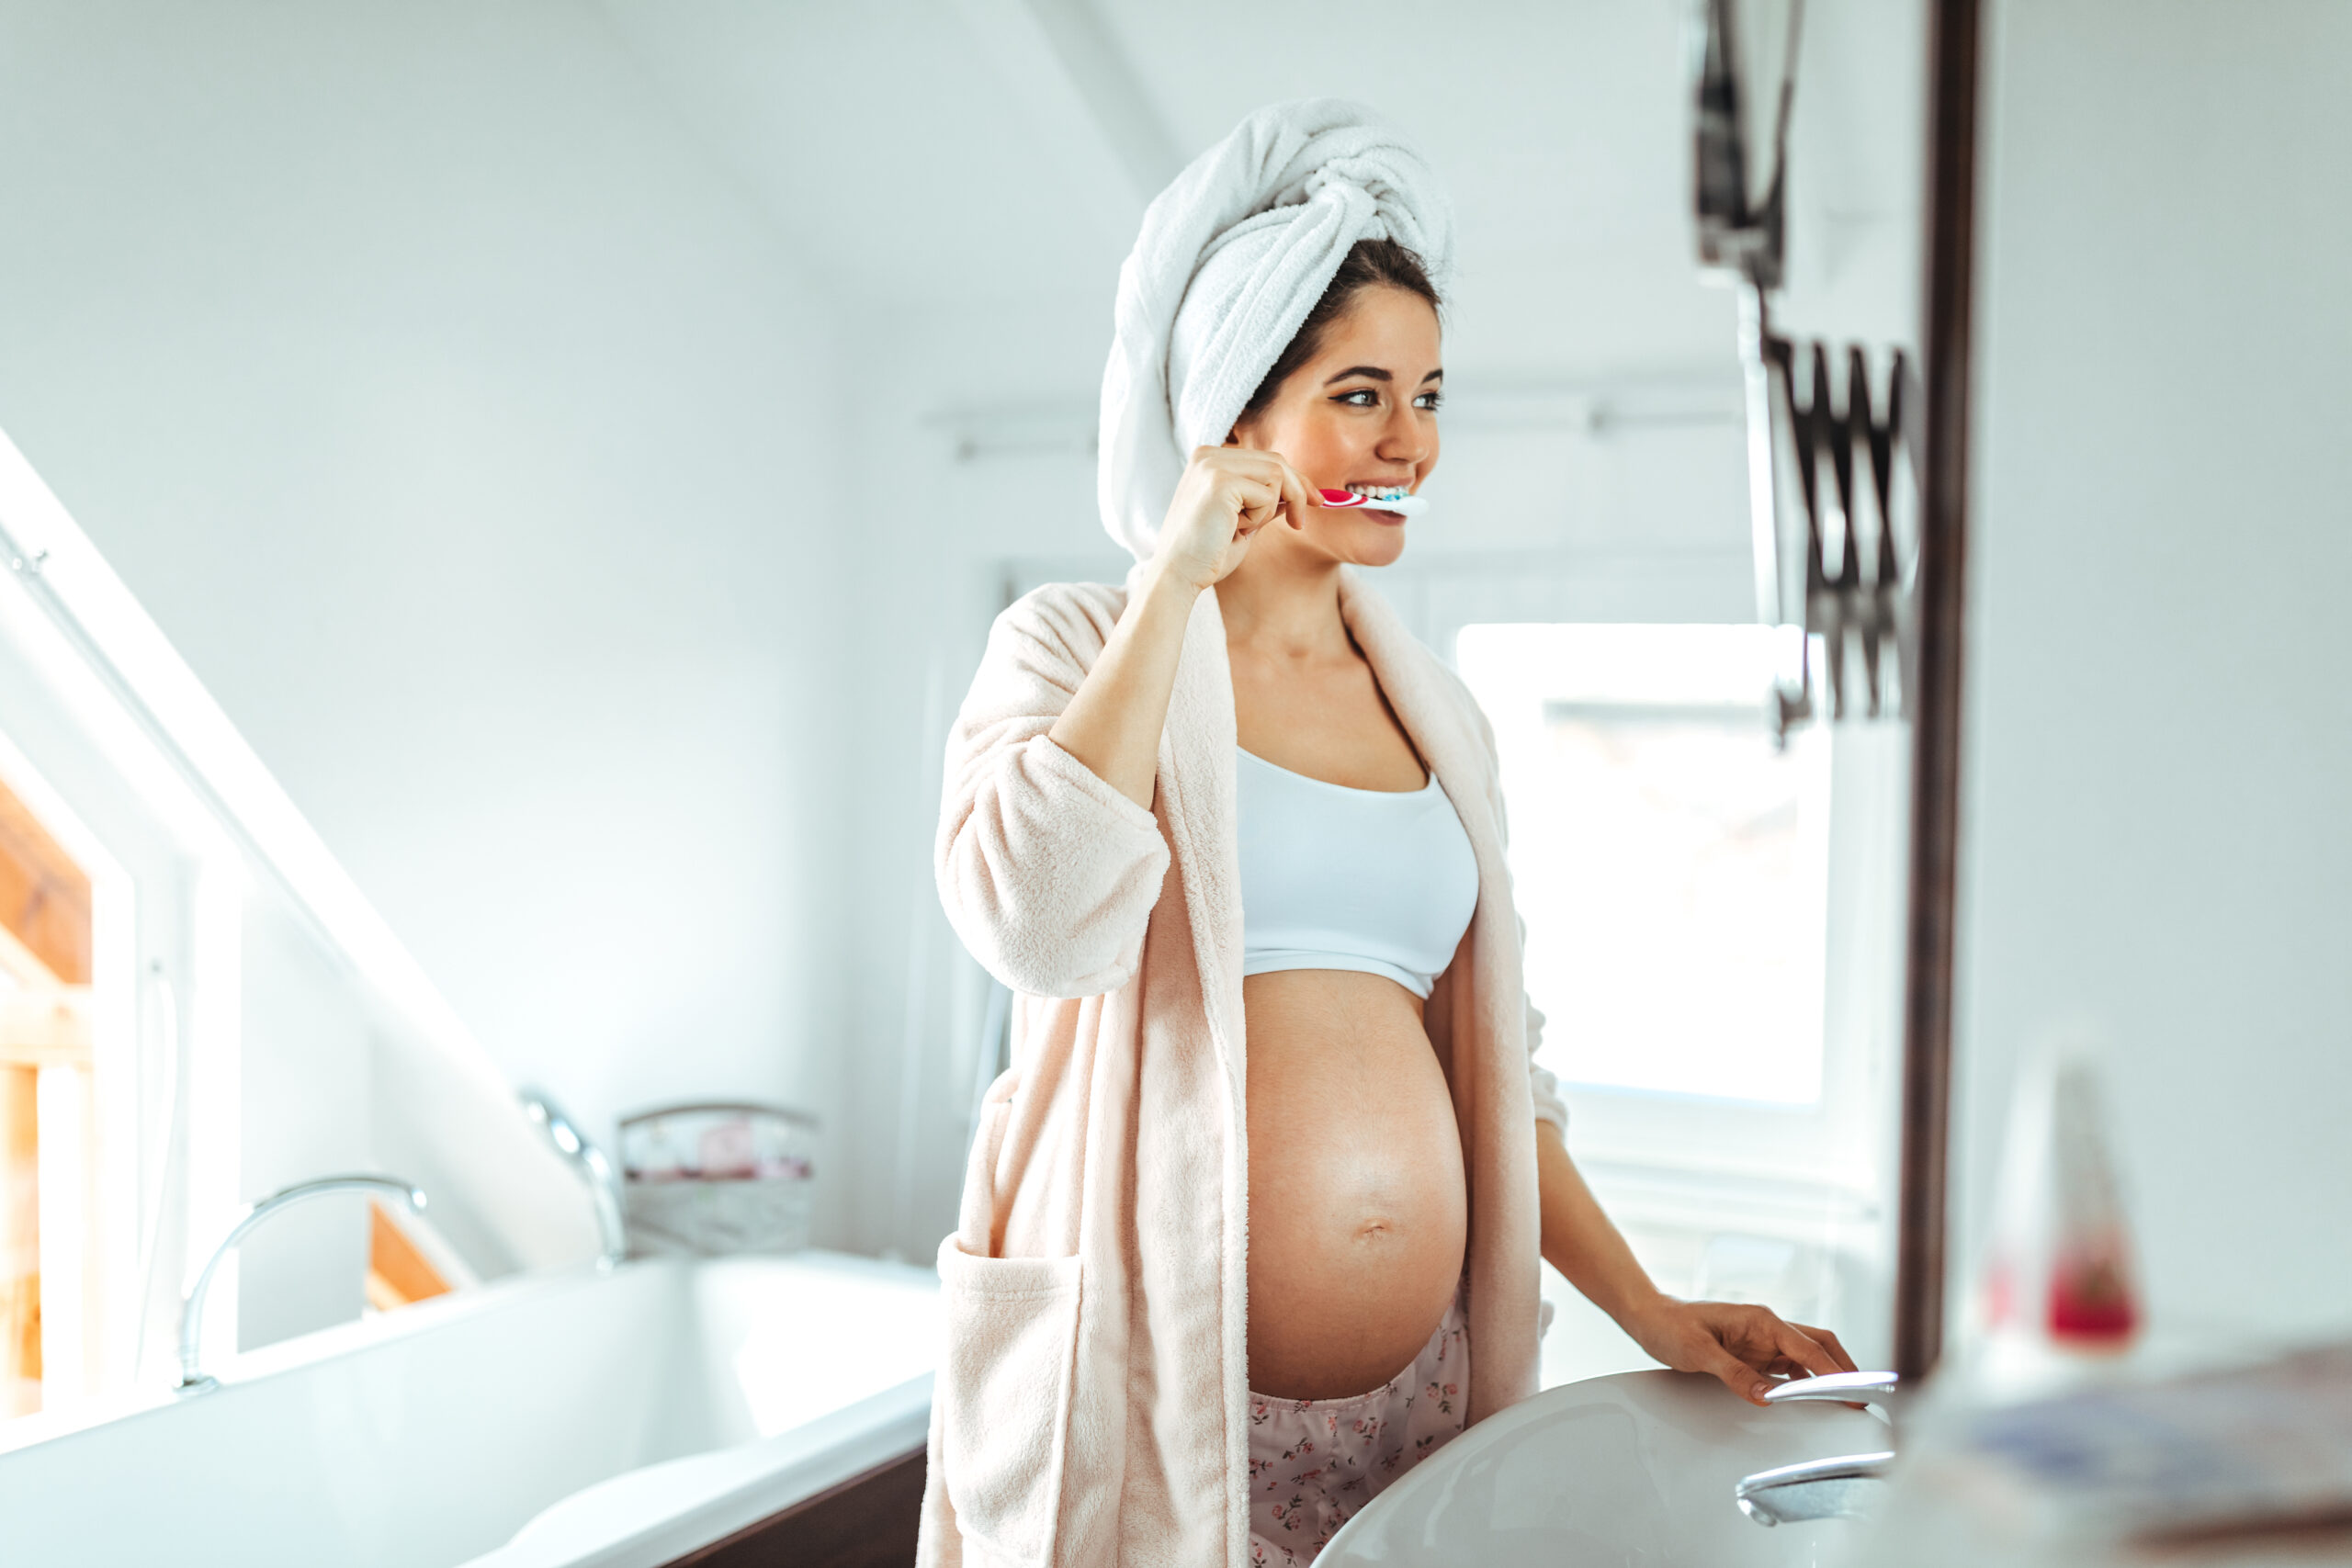 CAN PREGNANTS GET DENTAL TREATMENT?